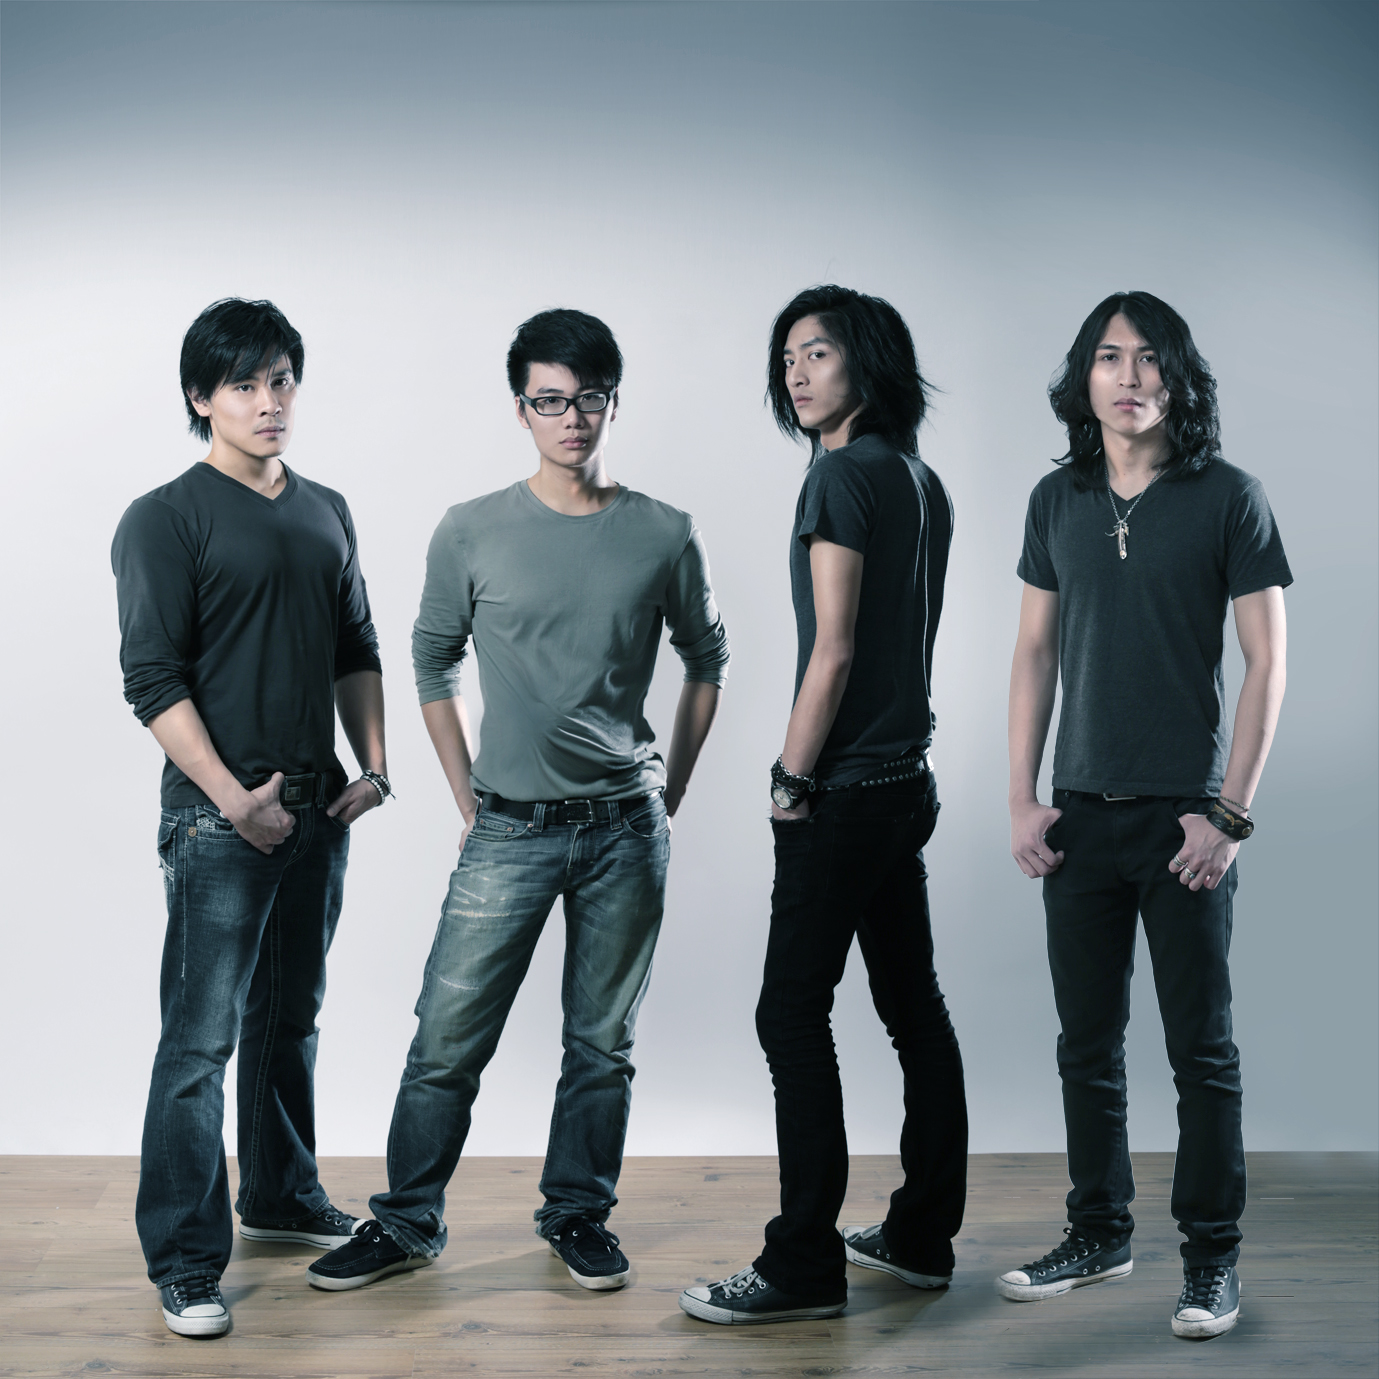 Bamboo Star is a local hard rock band in Hong Kong